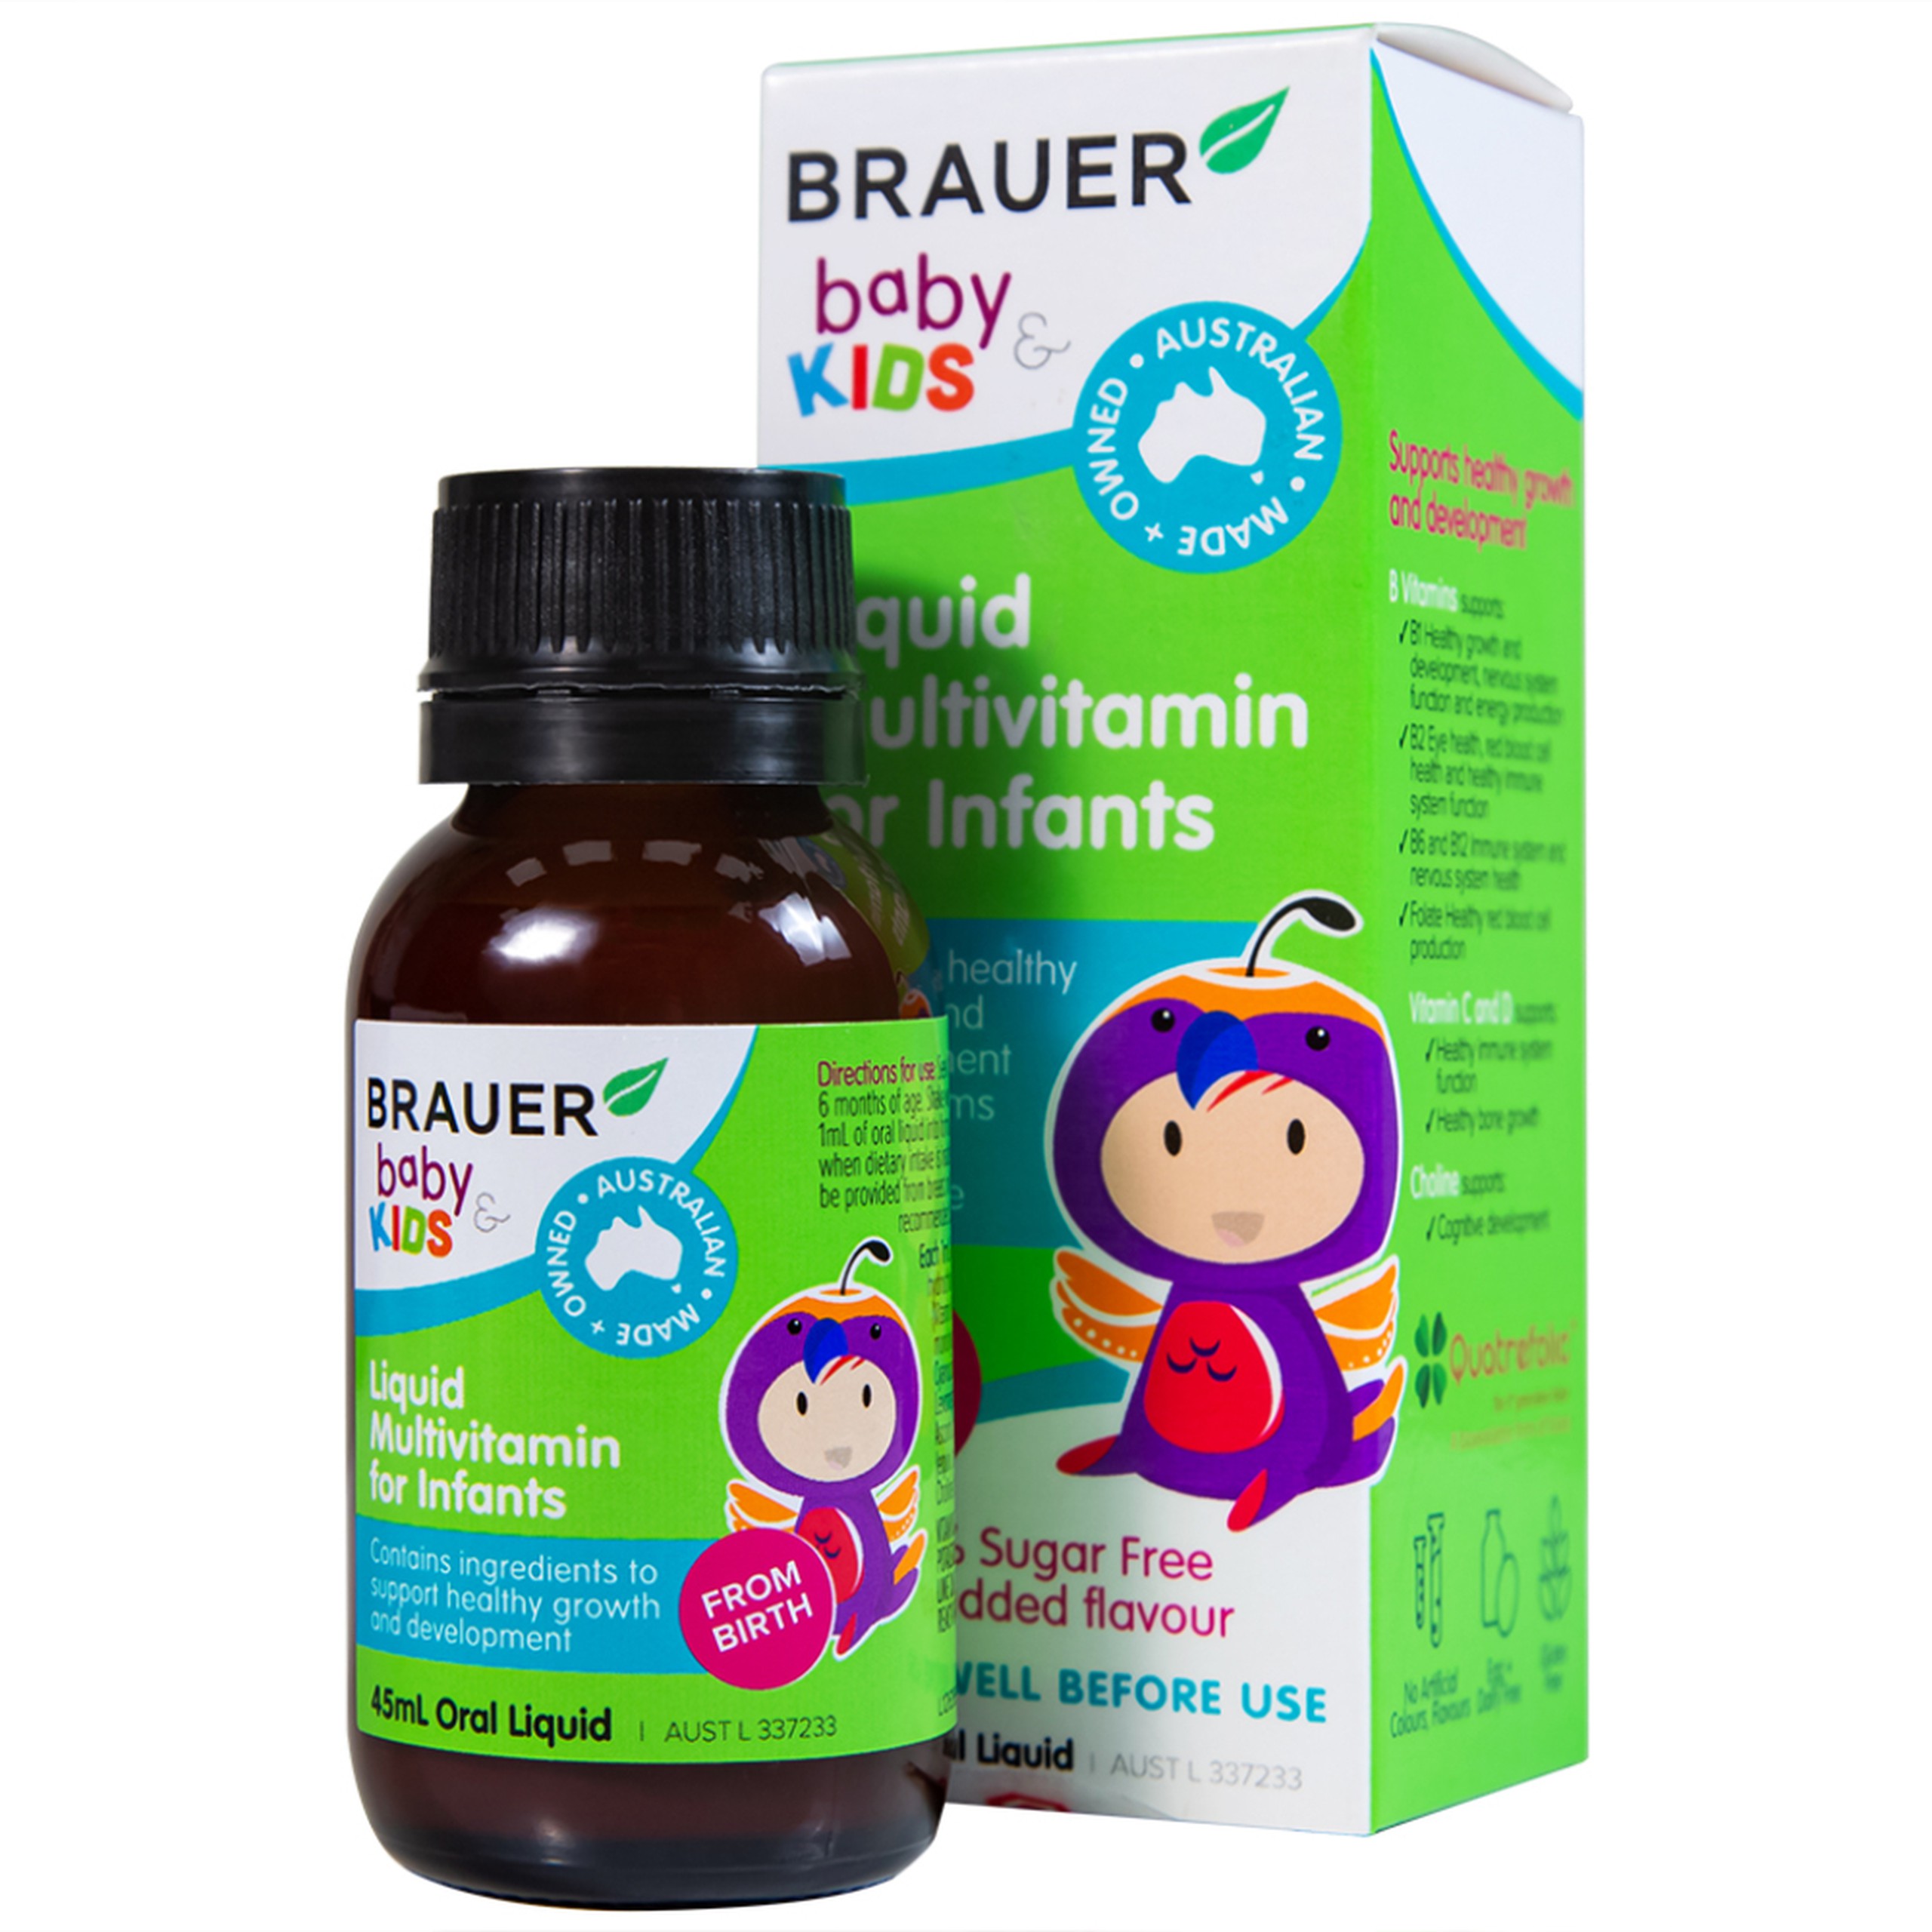 Siro Brauer Baby & Kids Liquid Multivitamin For Infants bổ sung vitamin tăng cường sức khỏe (45ml)